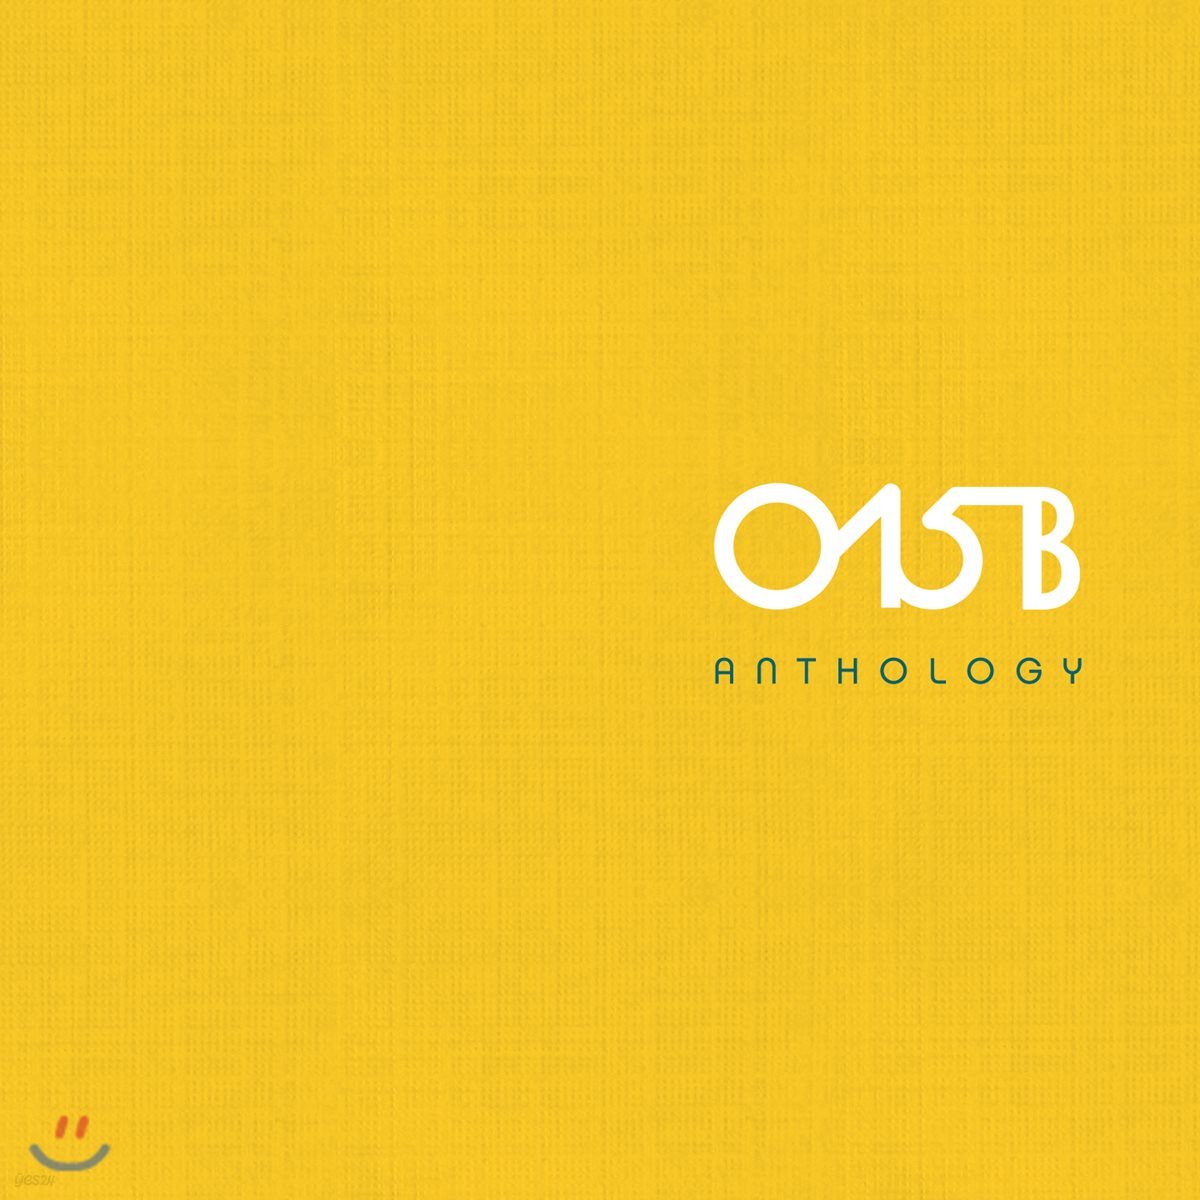 015B (공일오비) - Anthology